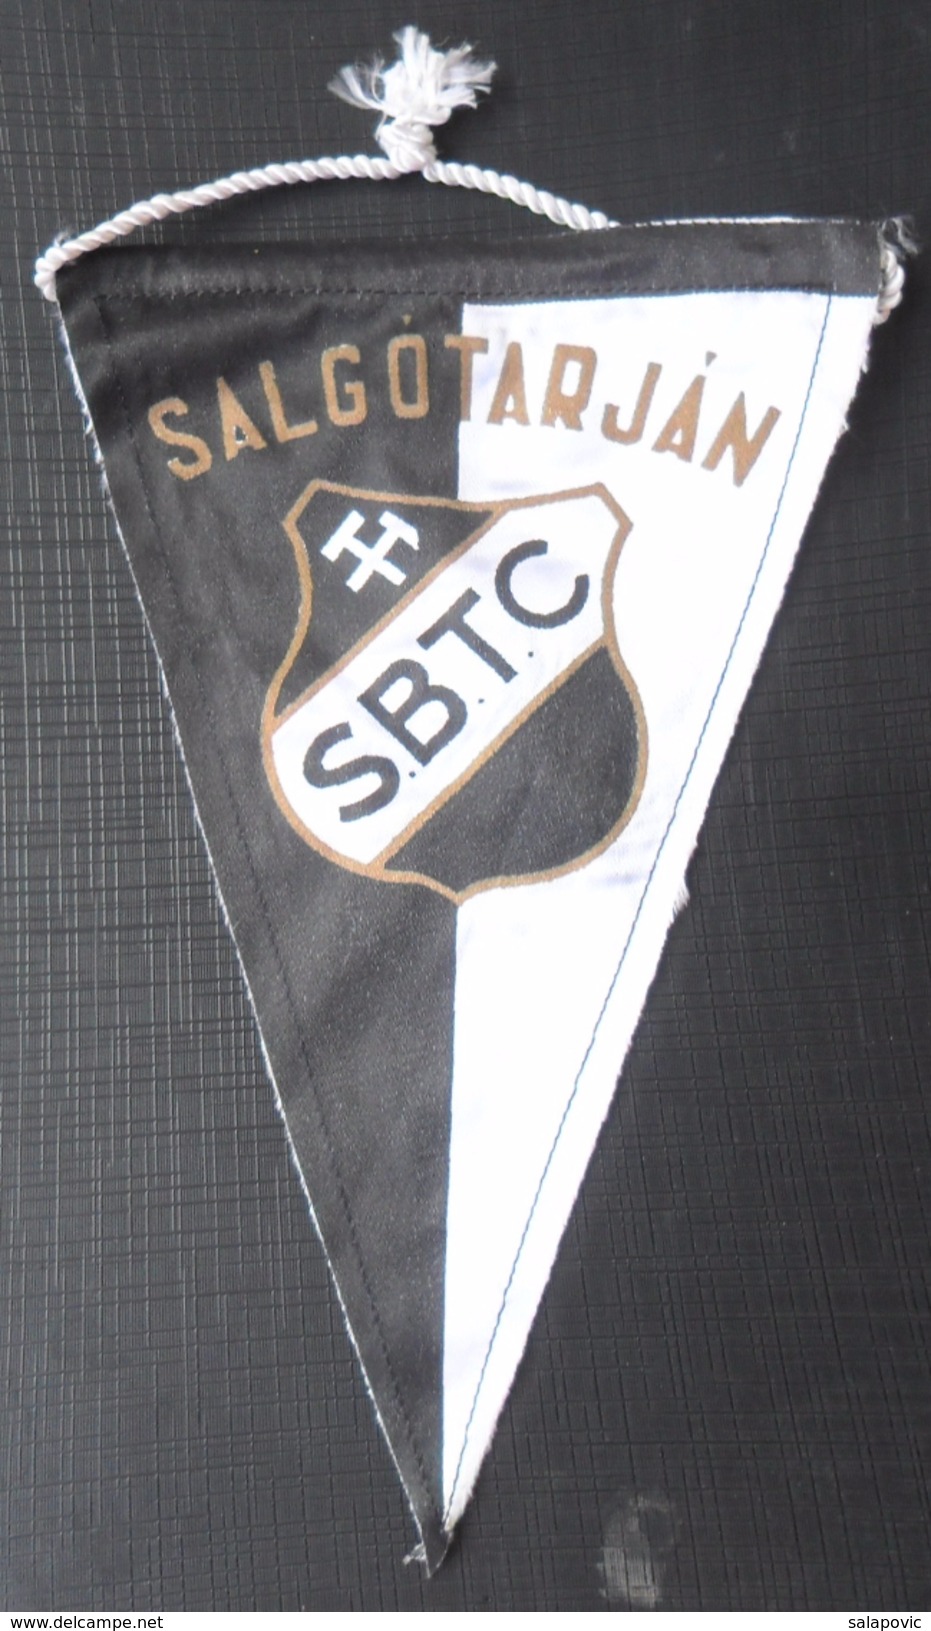 Salgotarjani BTC HUNGARY FOOTBALL CLUB, SOCCER / FUTBOL / CALCIO OLD PENNANT, SPORTS FLAG - Uniformes Recordatorios & Misc